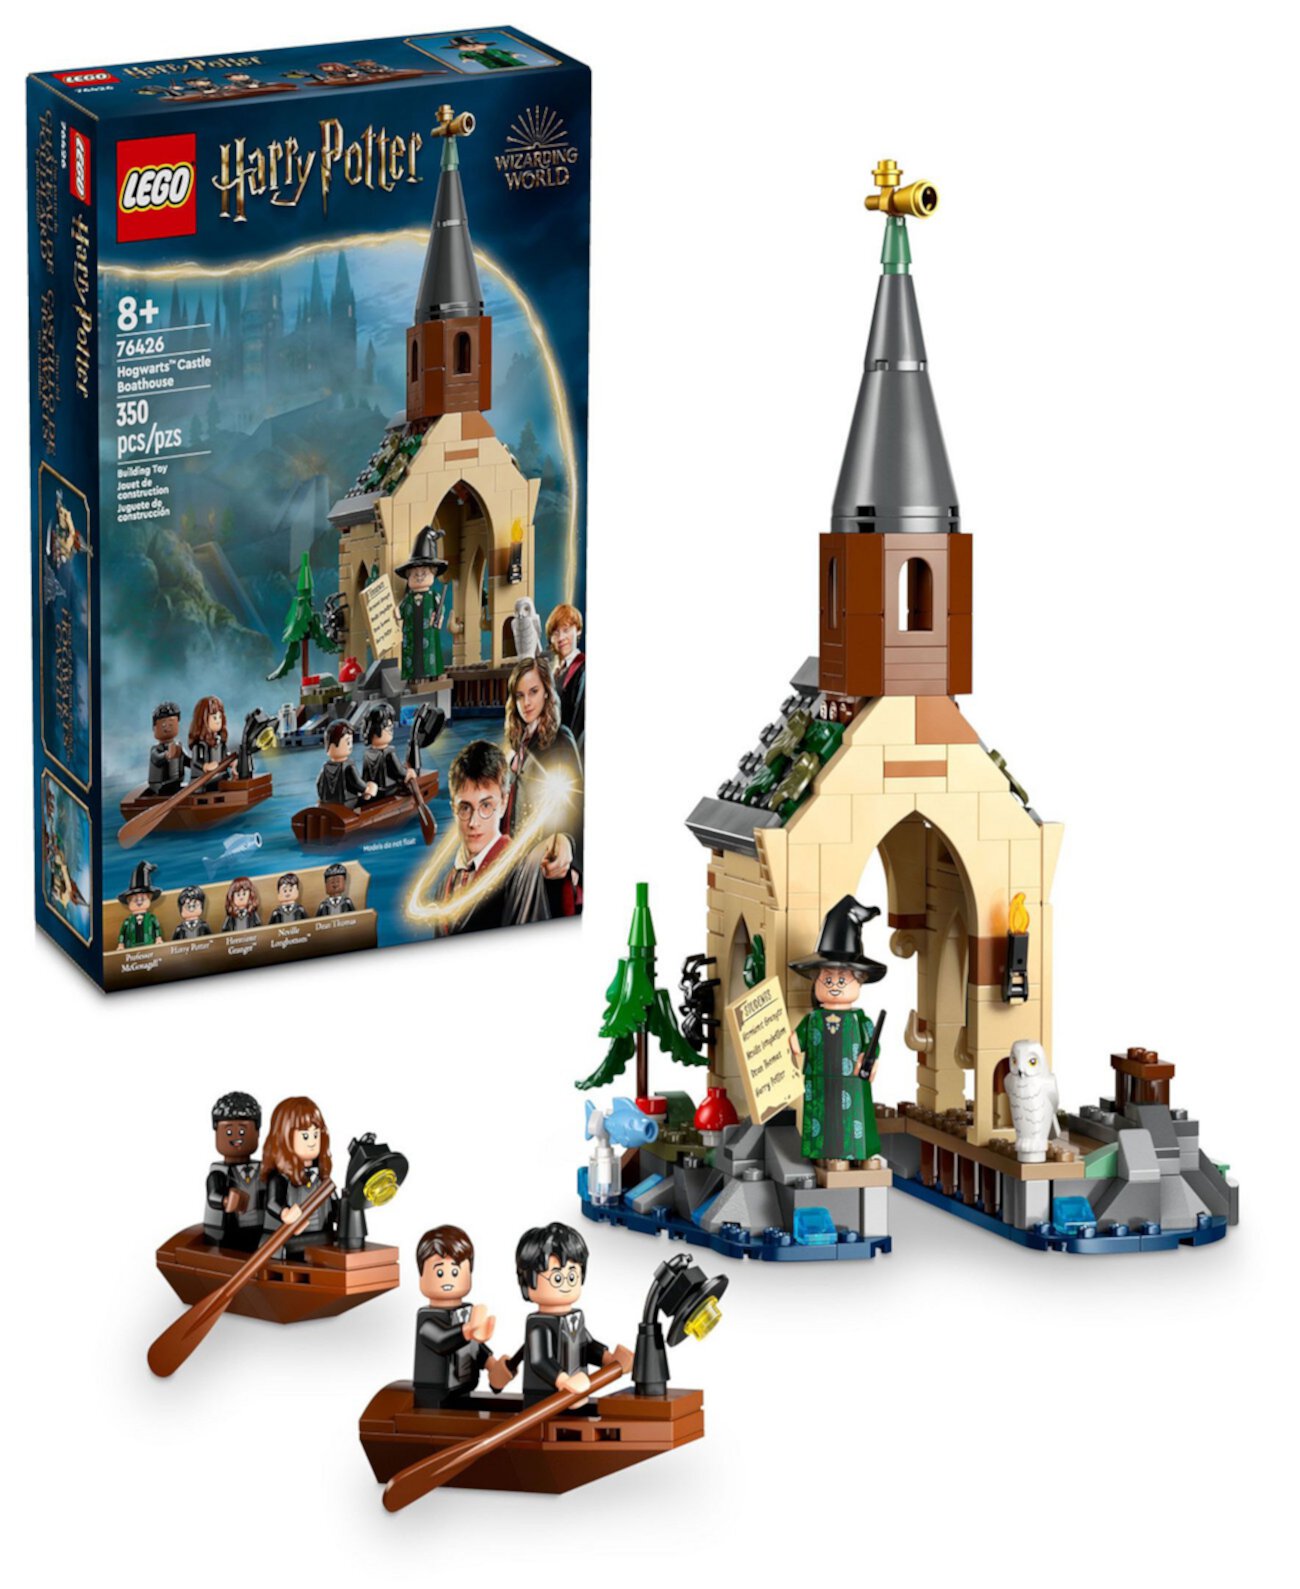 LEGO Harry Potter Hogwarts Castle Boathouse 76426 Toy Building Set, 350 Pieces Lego